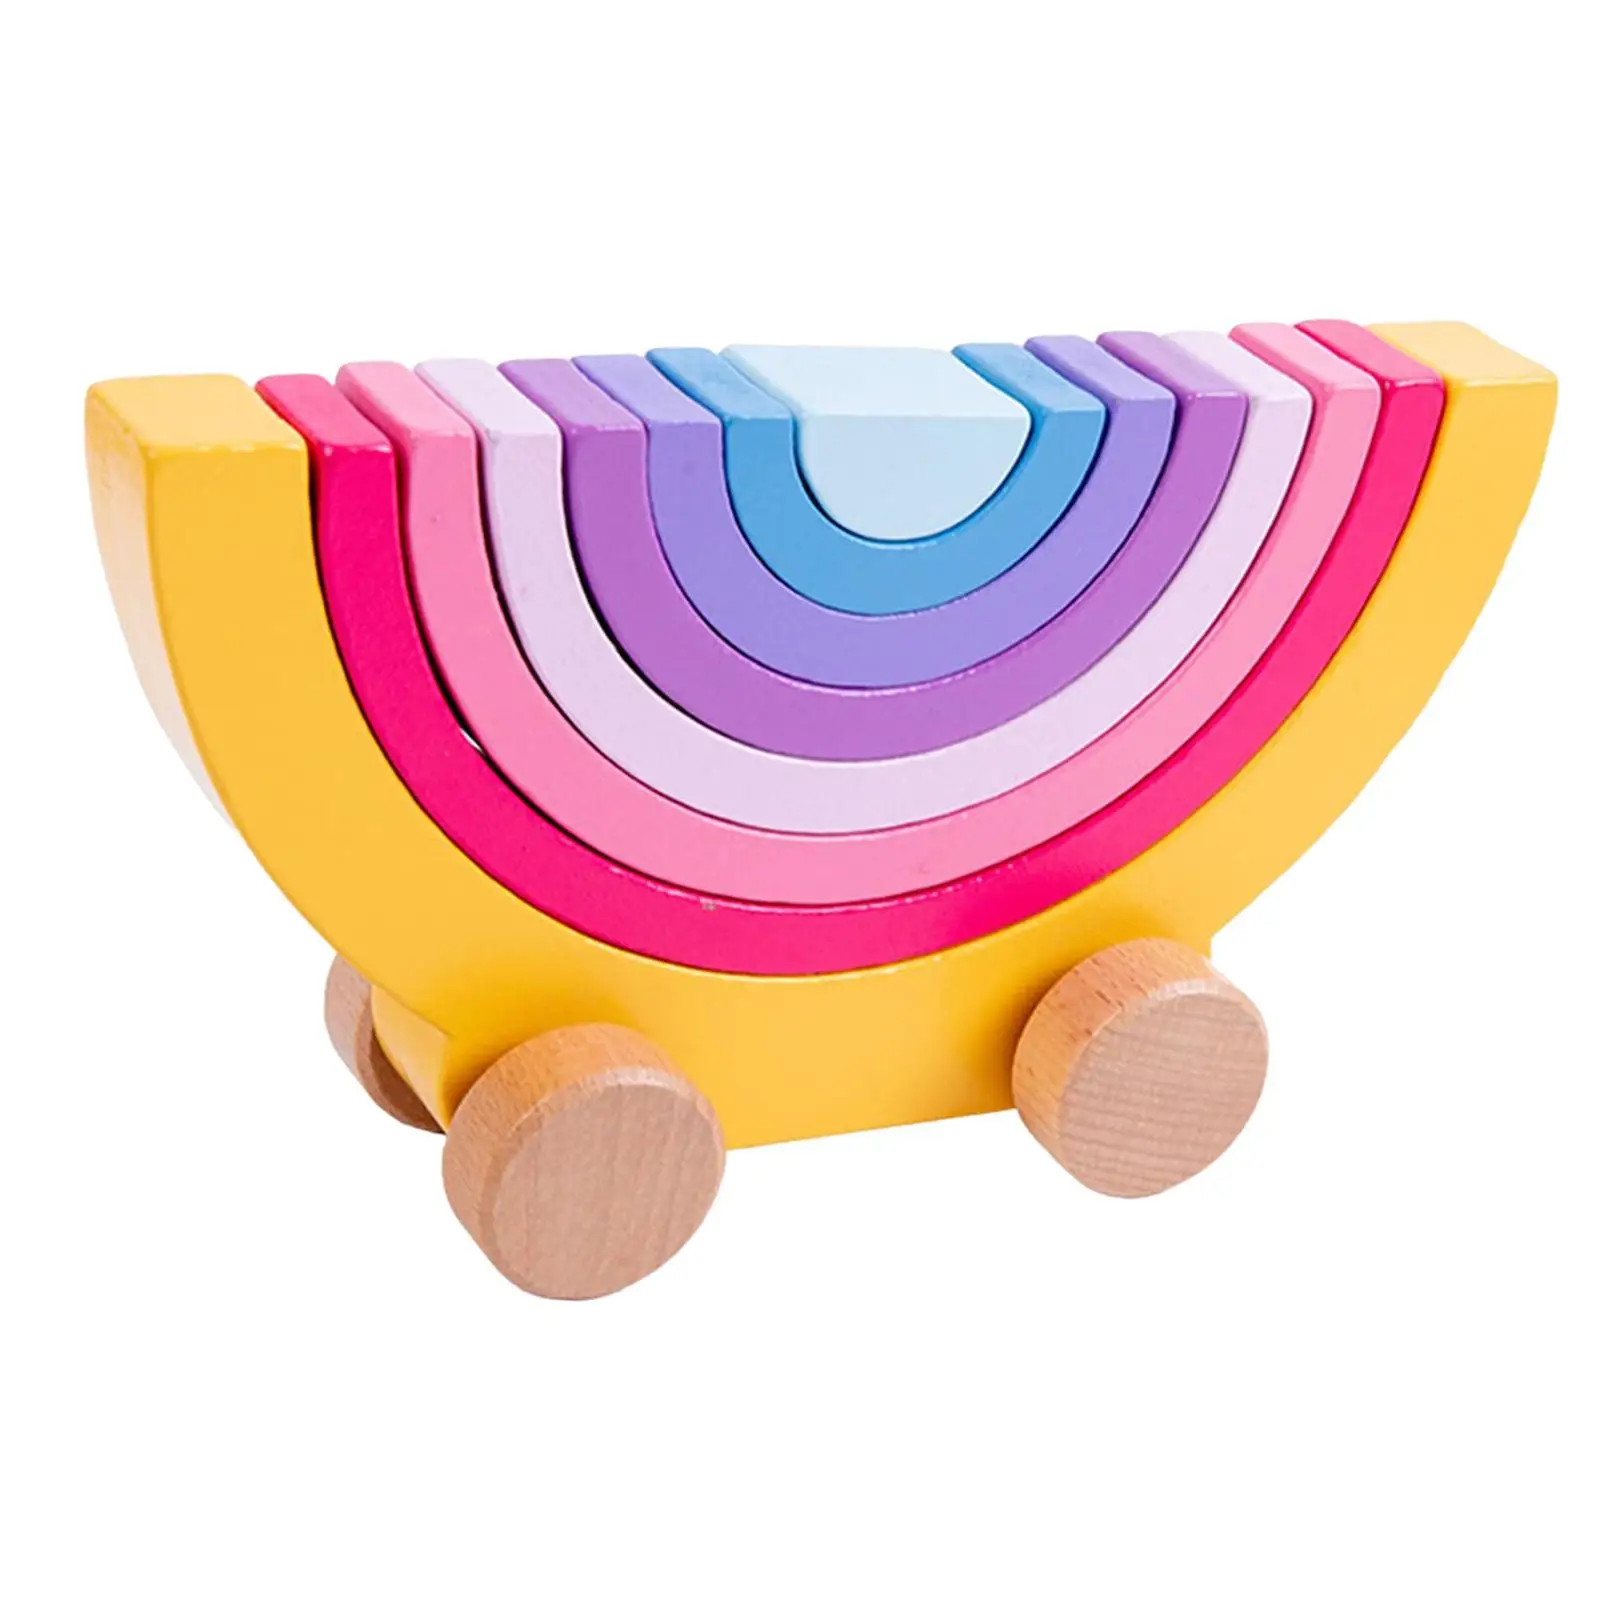 Wooden Building Blocks Car Toy Stackable Development Creative Decor for Kids